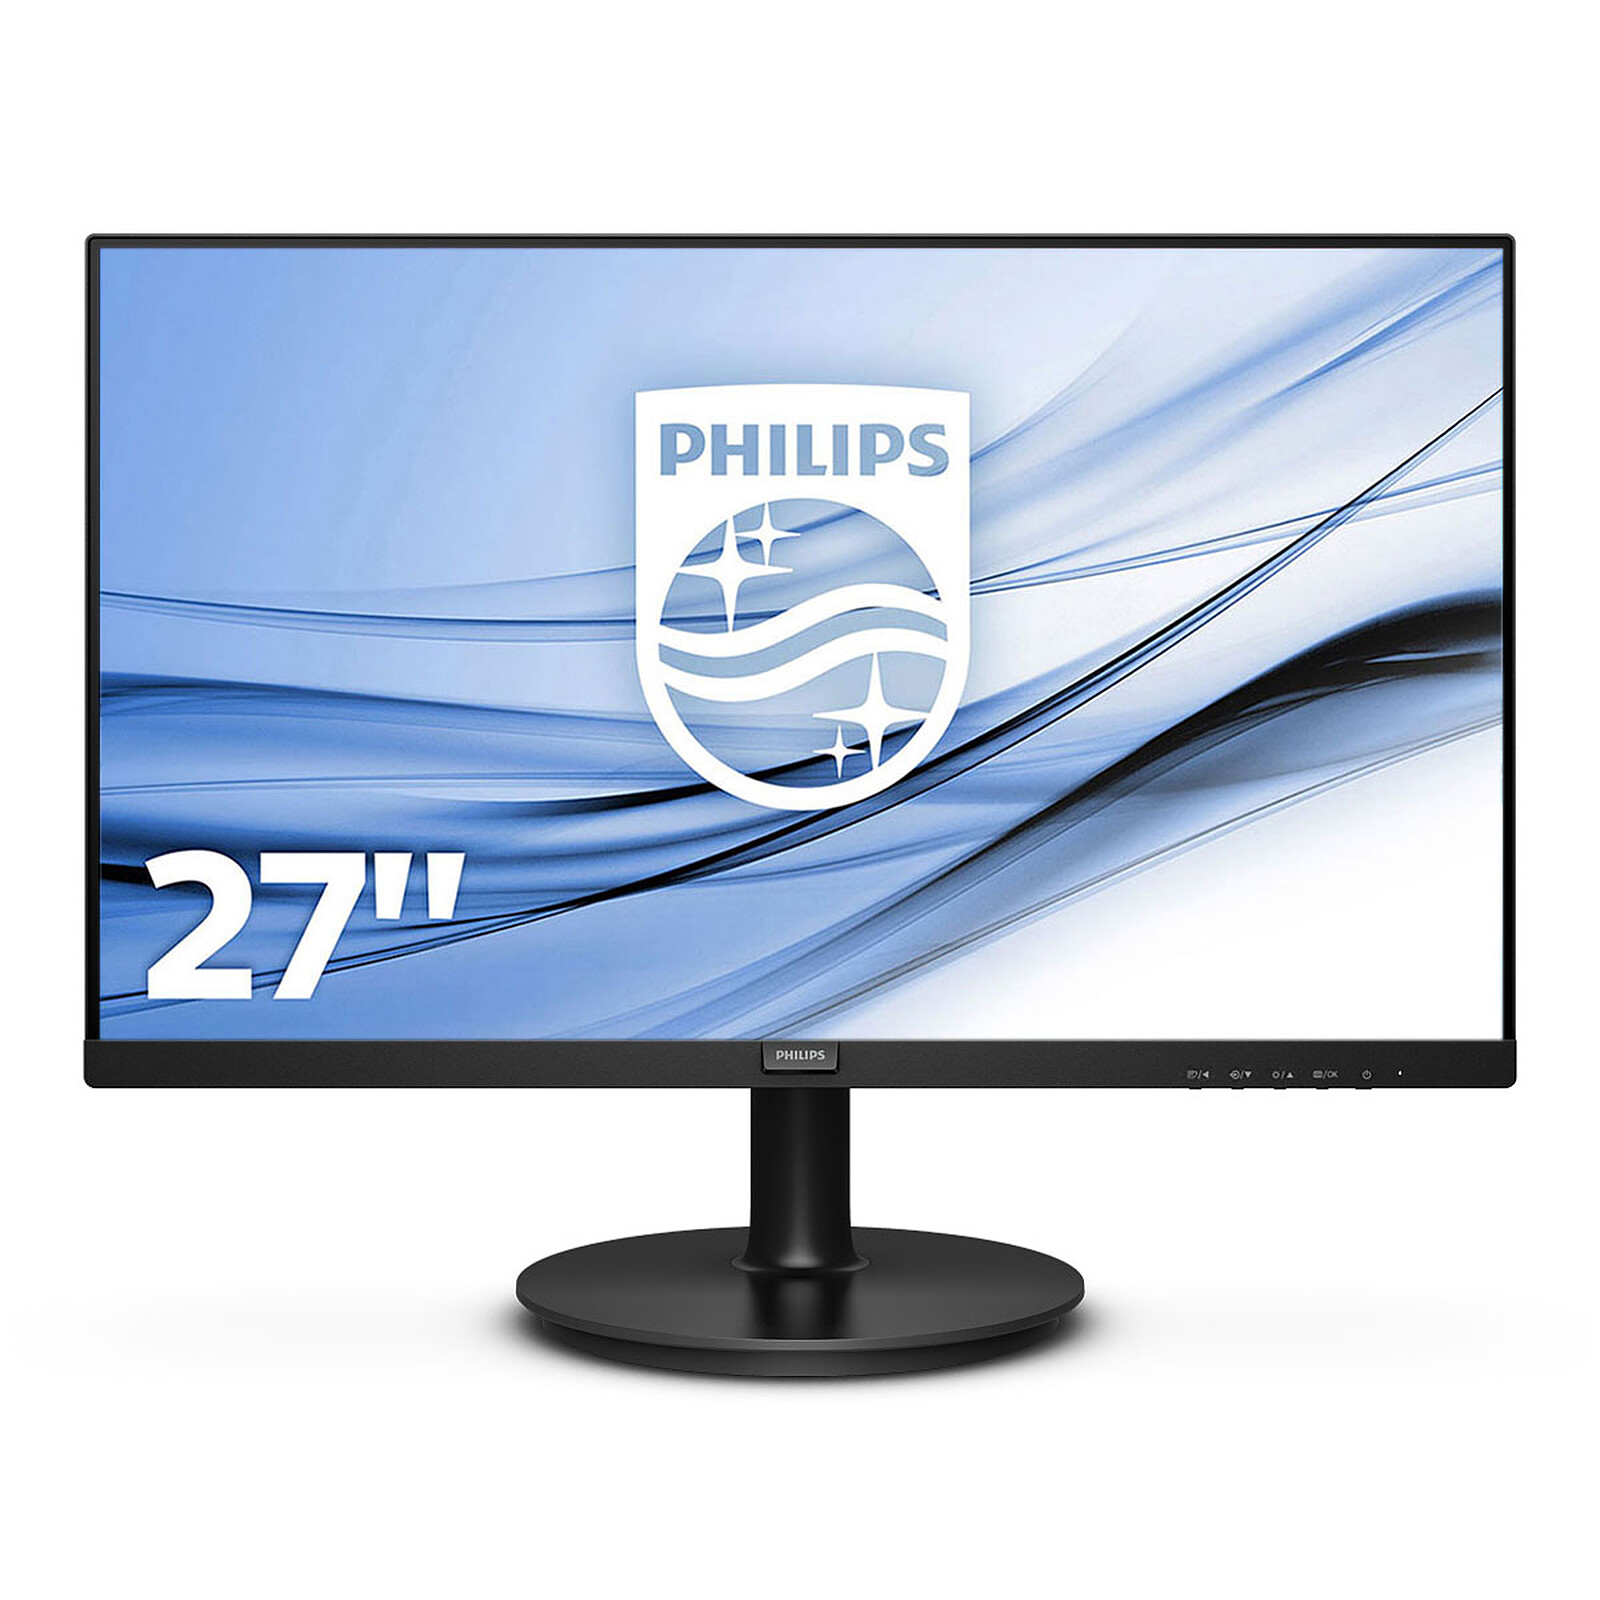 Philips 27 LED - 271V8L - PC monitor - LDLC 3-year warranty